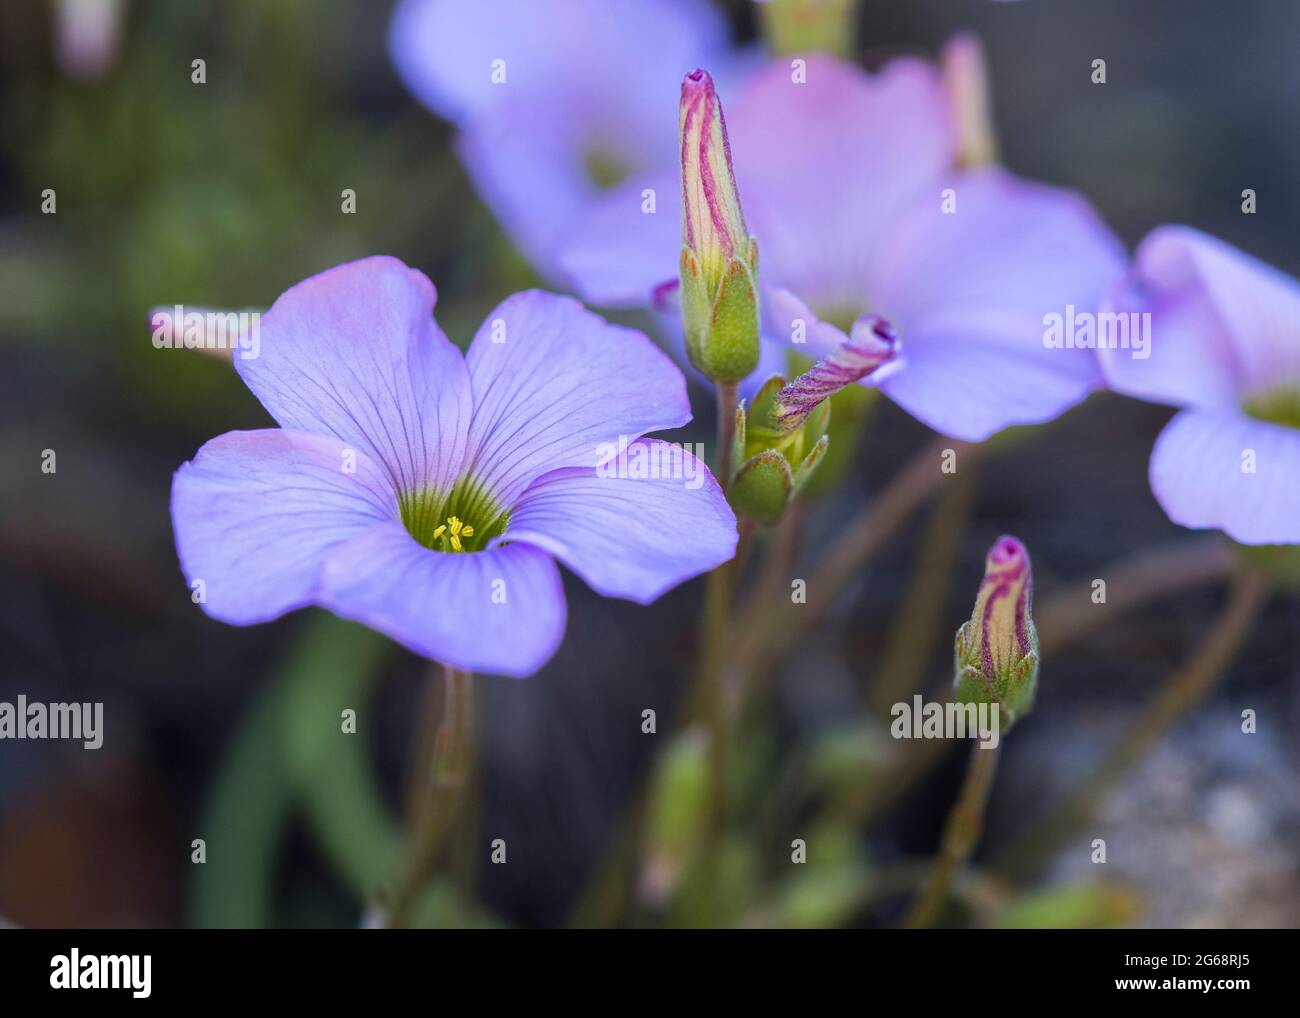 Manyleaf Sorrel (Oxalis polyphylla) plant flowering with light purple flowers Stock Photo